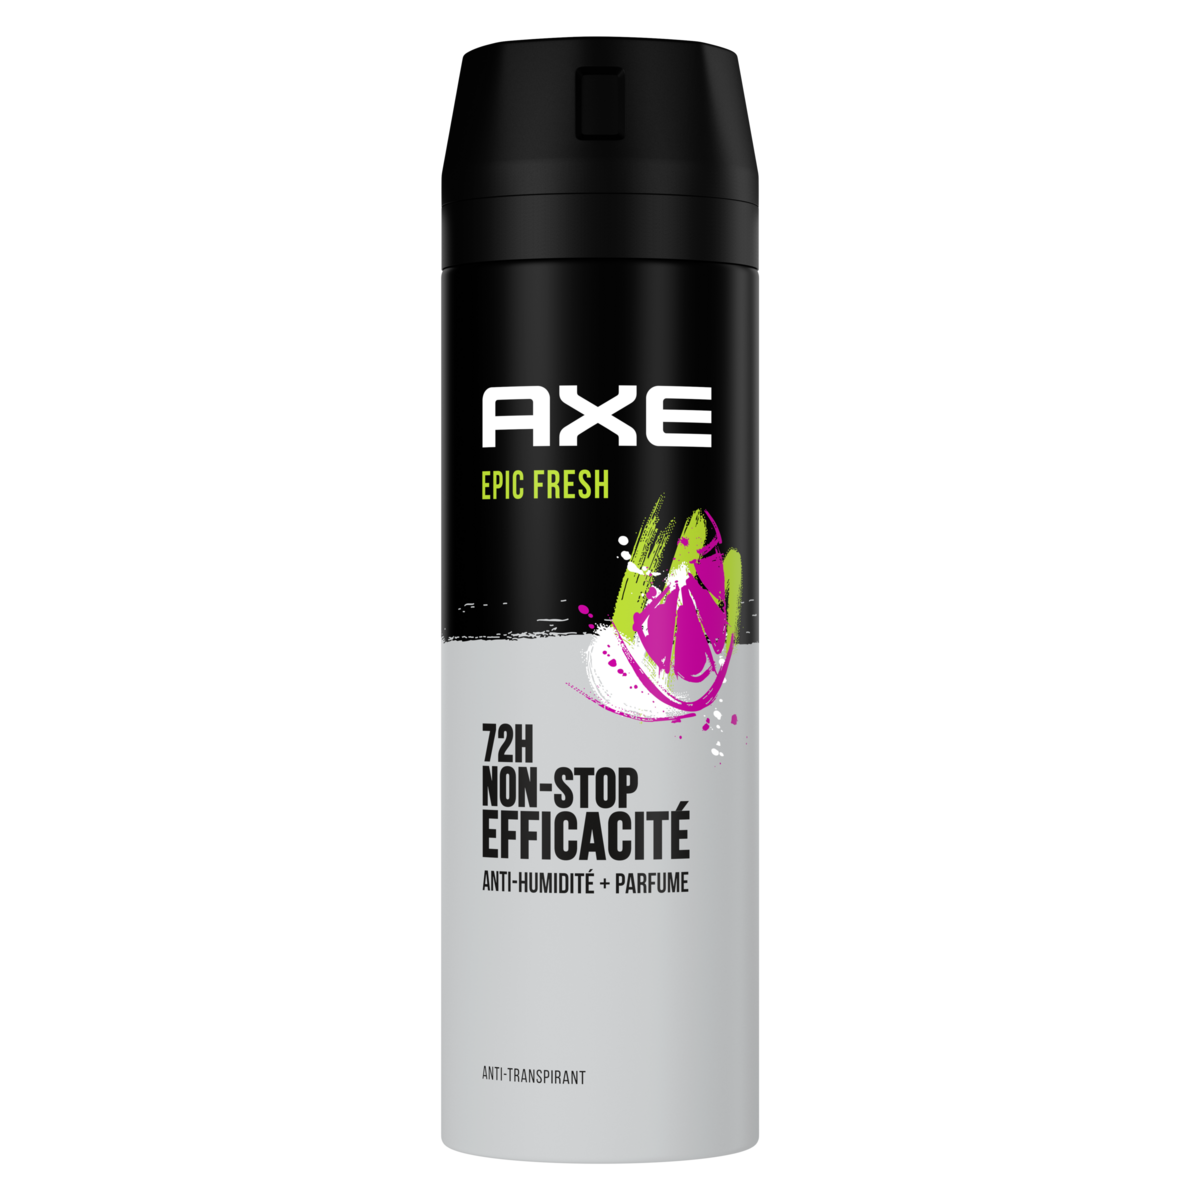 AXE Déodorant spray epic fresh 72h anti-humidité anti-transpirant 200ml